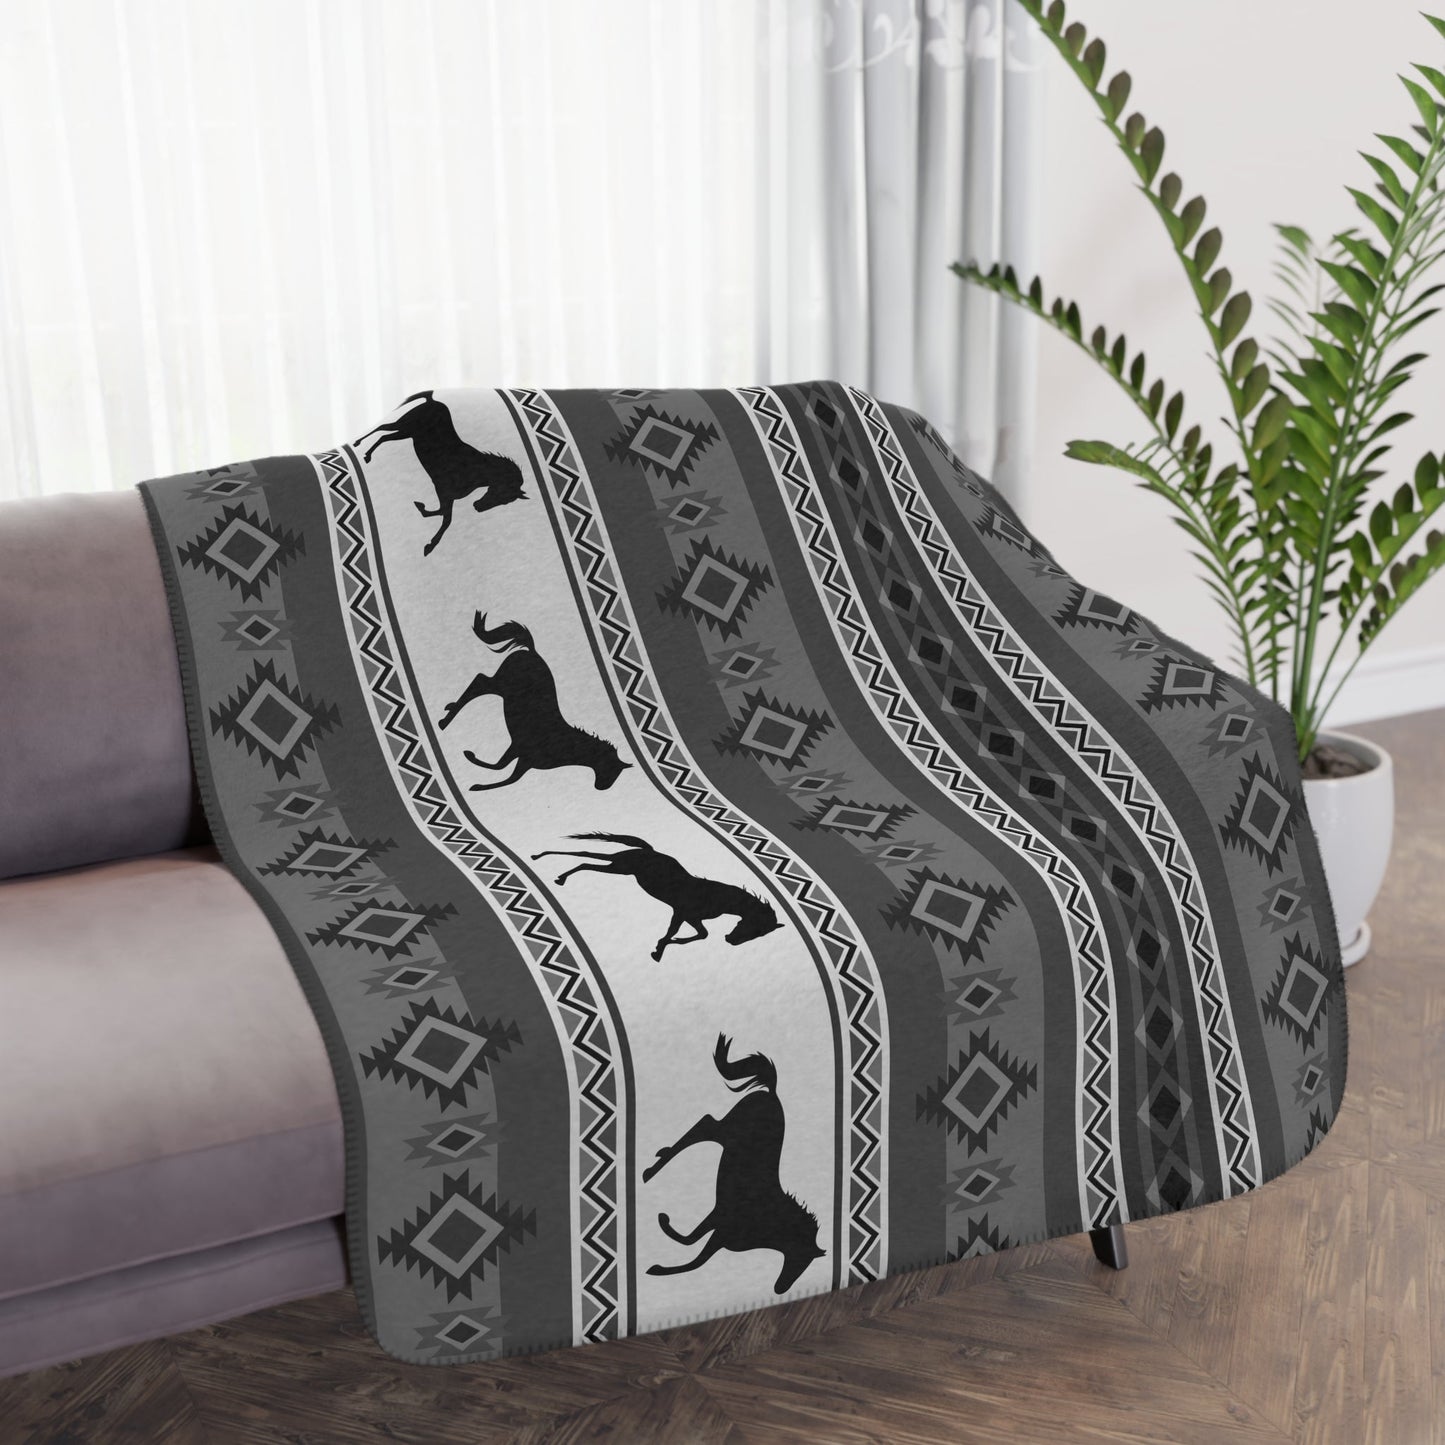 Southwest Native American Pattern Sherpa Blanket - Black and White Navaho Inspired Tribal Design - FlooredByArt